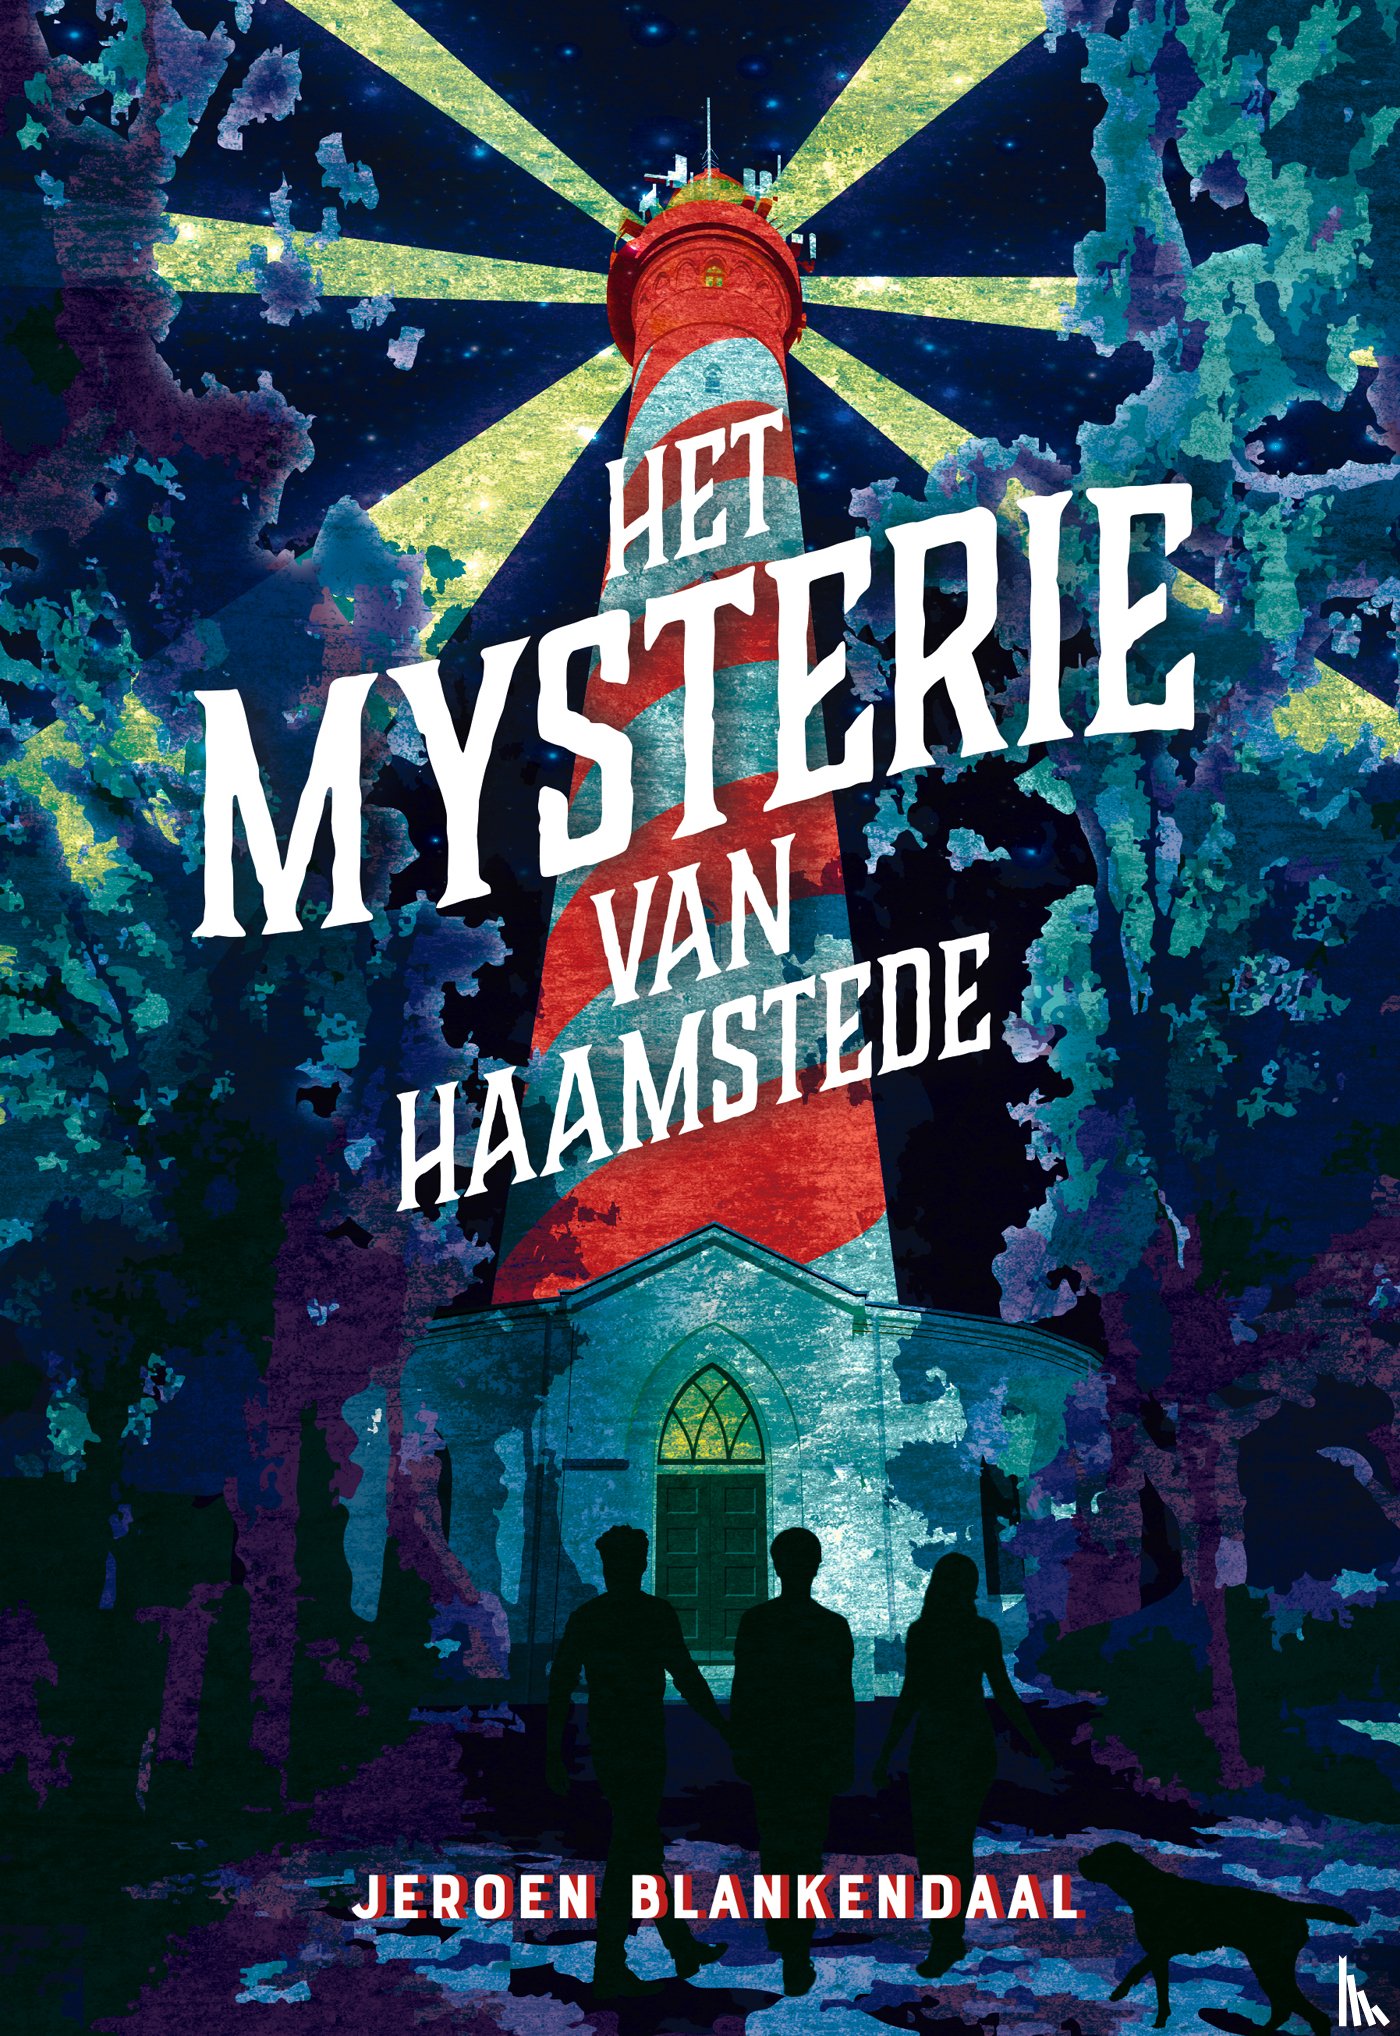 Blankendaal, Jeroen - Het mysterie van Haamstede